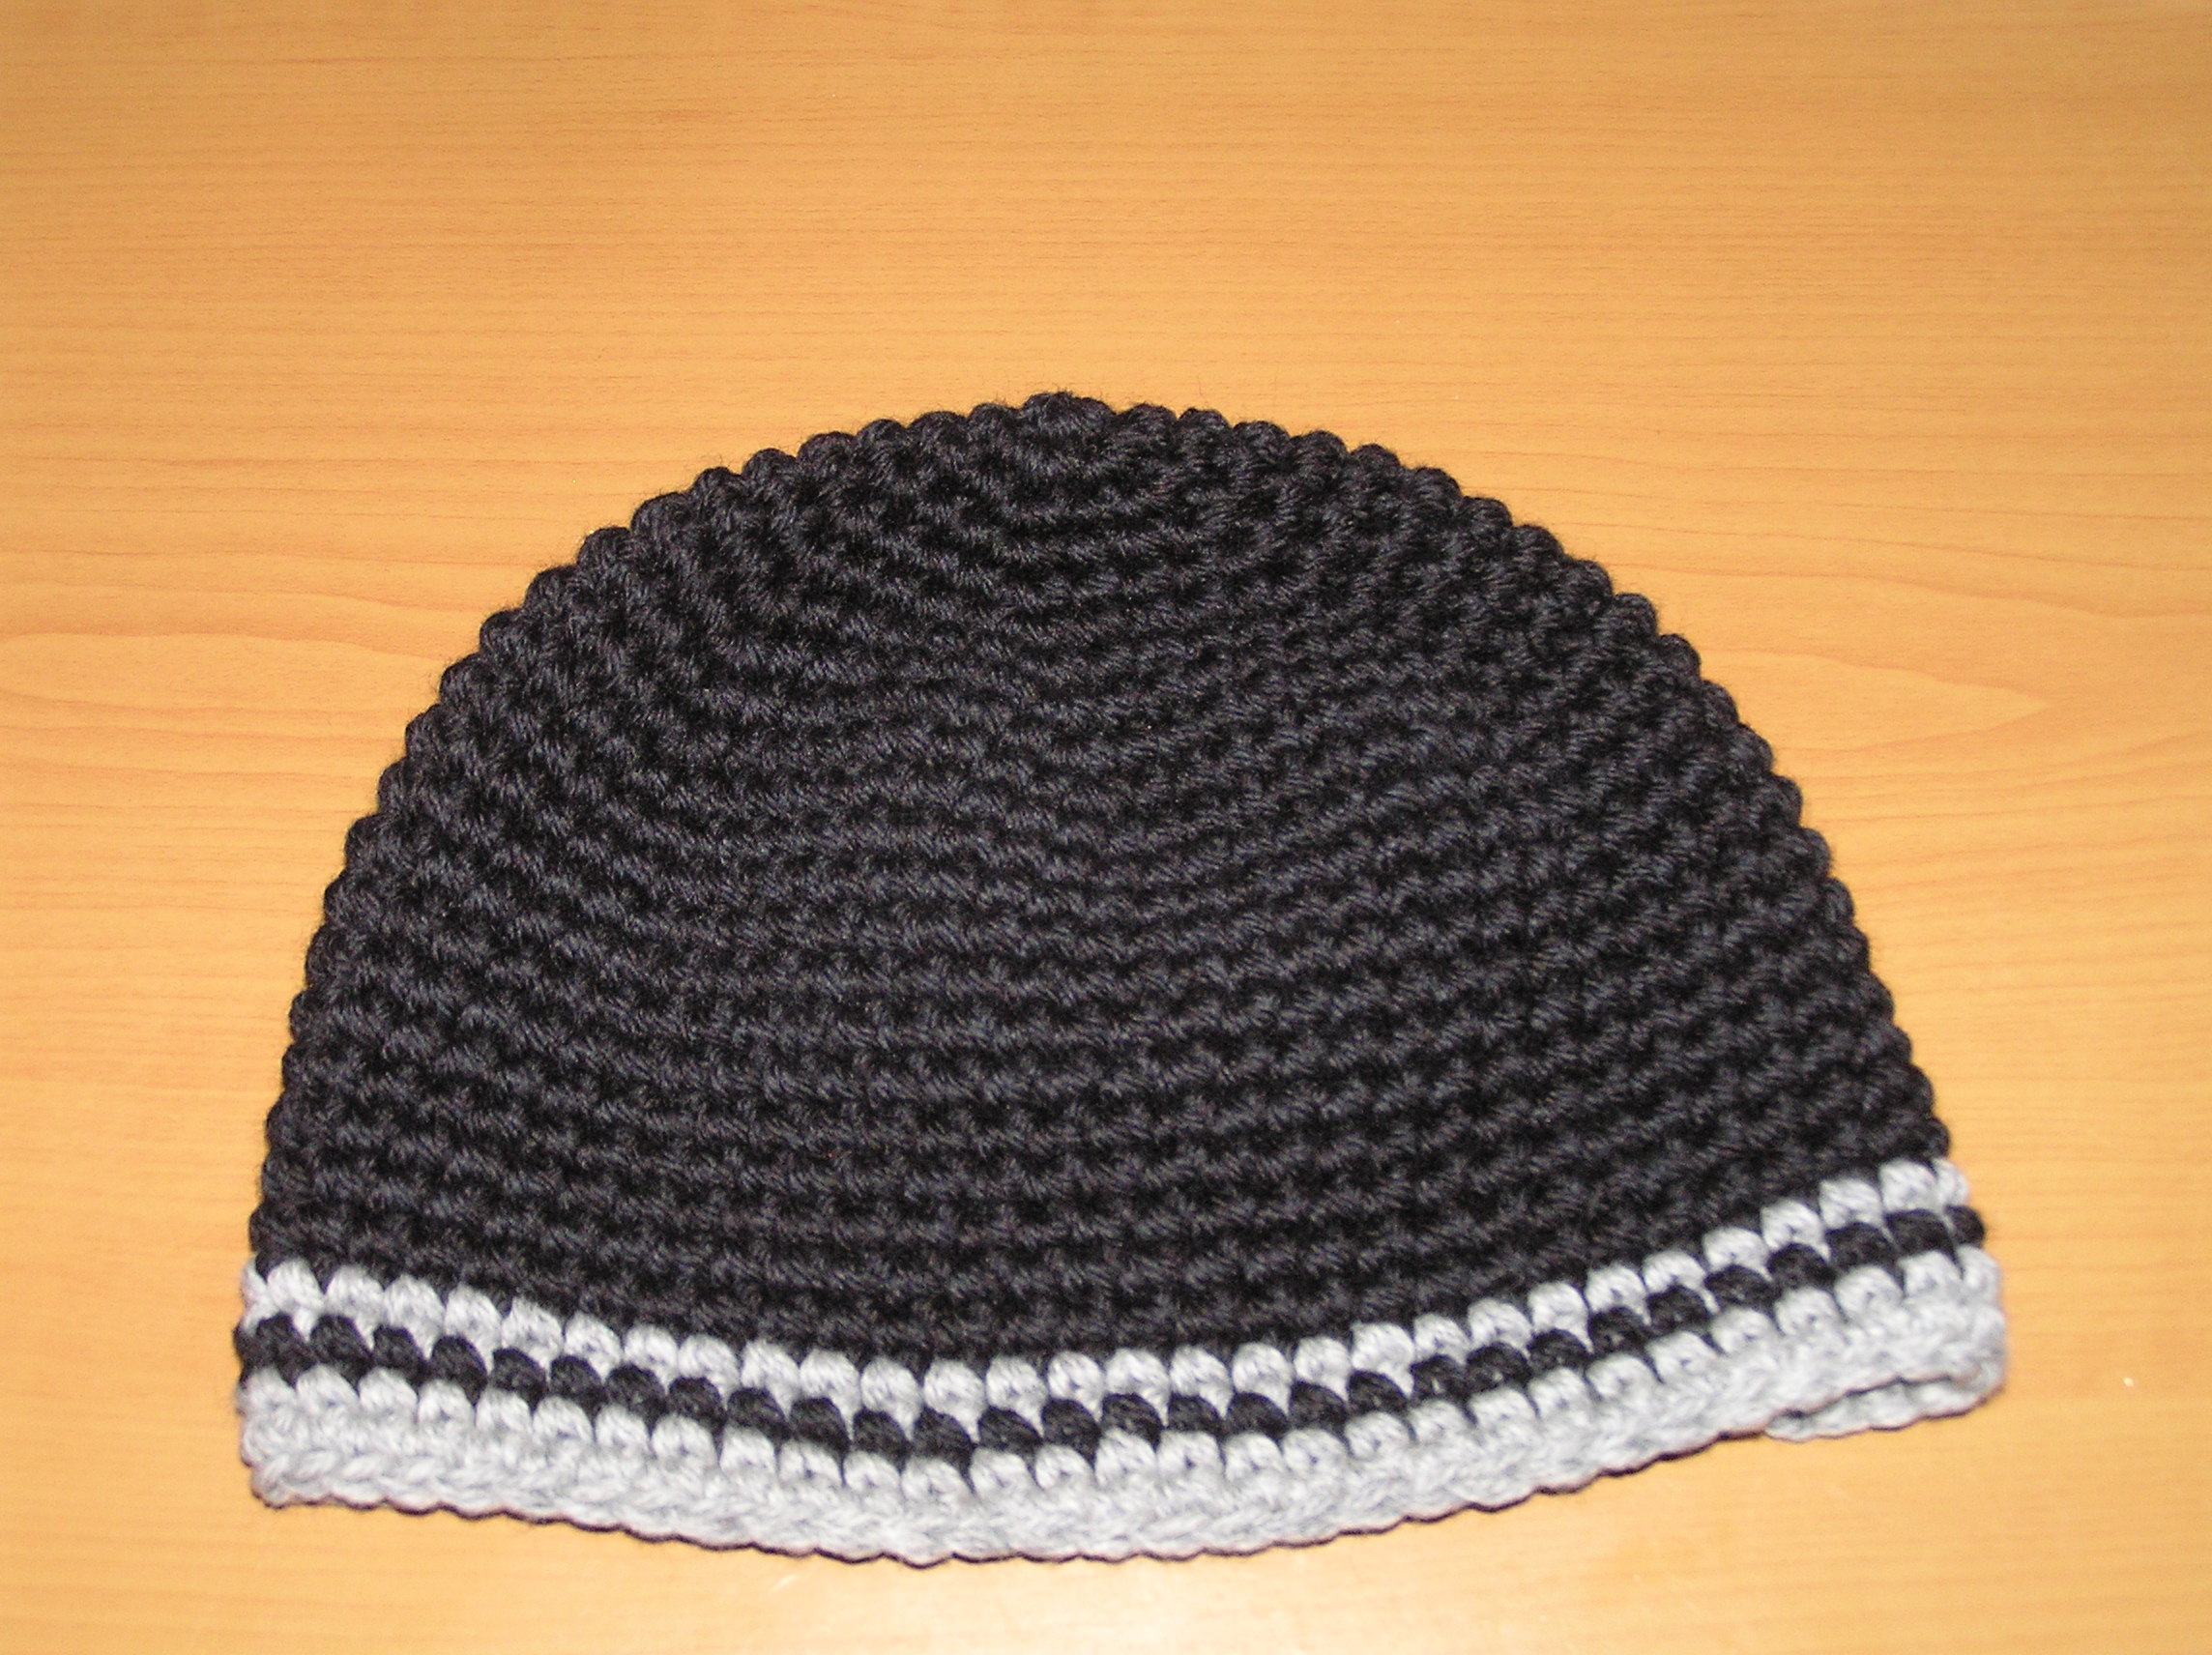 30 Slouchy Beanie Beret Tam Cap Hat F
ree Crochet Patterns - Yahoo